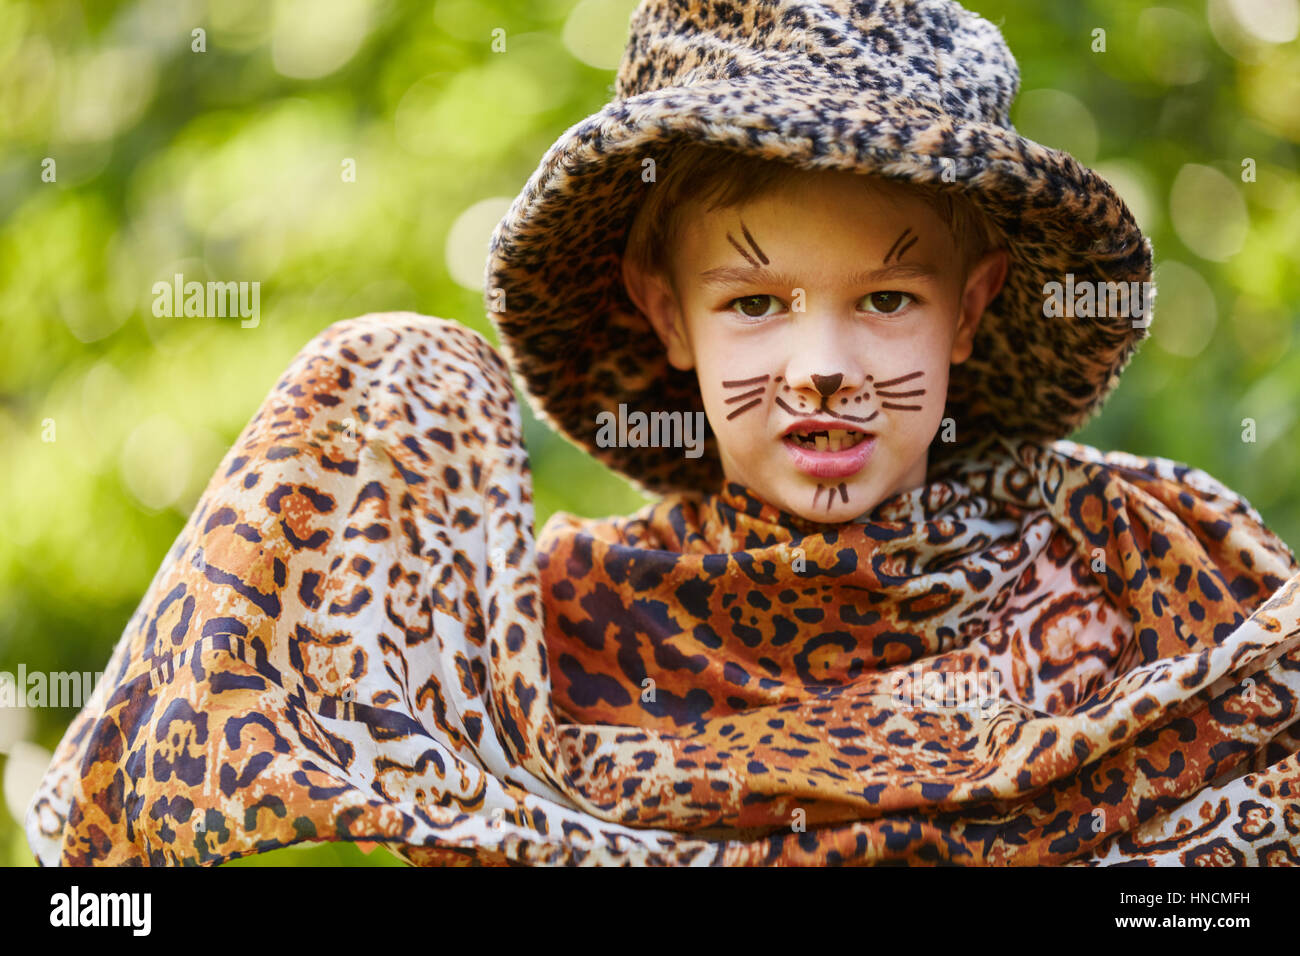 Kind mit Leoparden-Kostüm und kreative Make-up im Karneval Stockfotografie  - Alamy